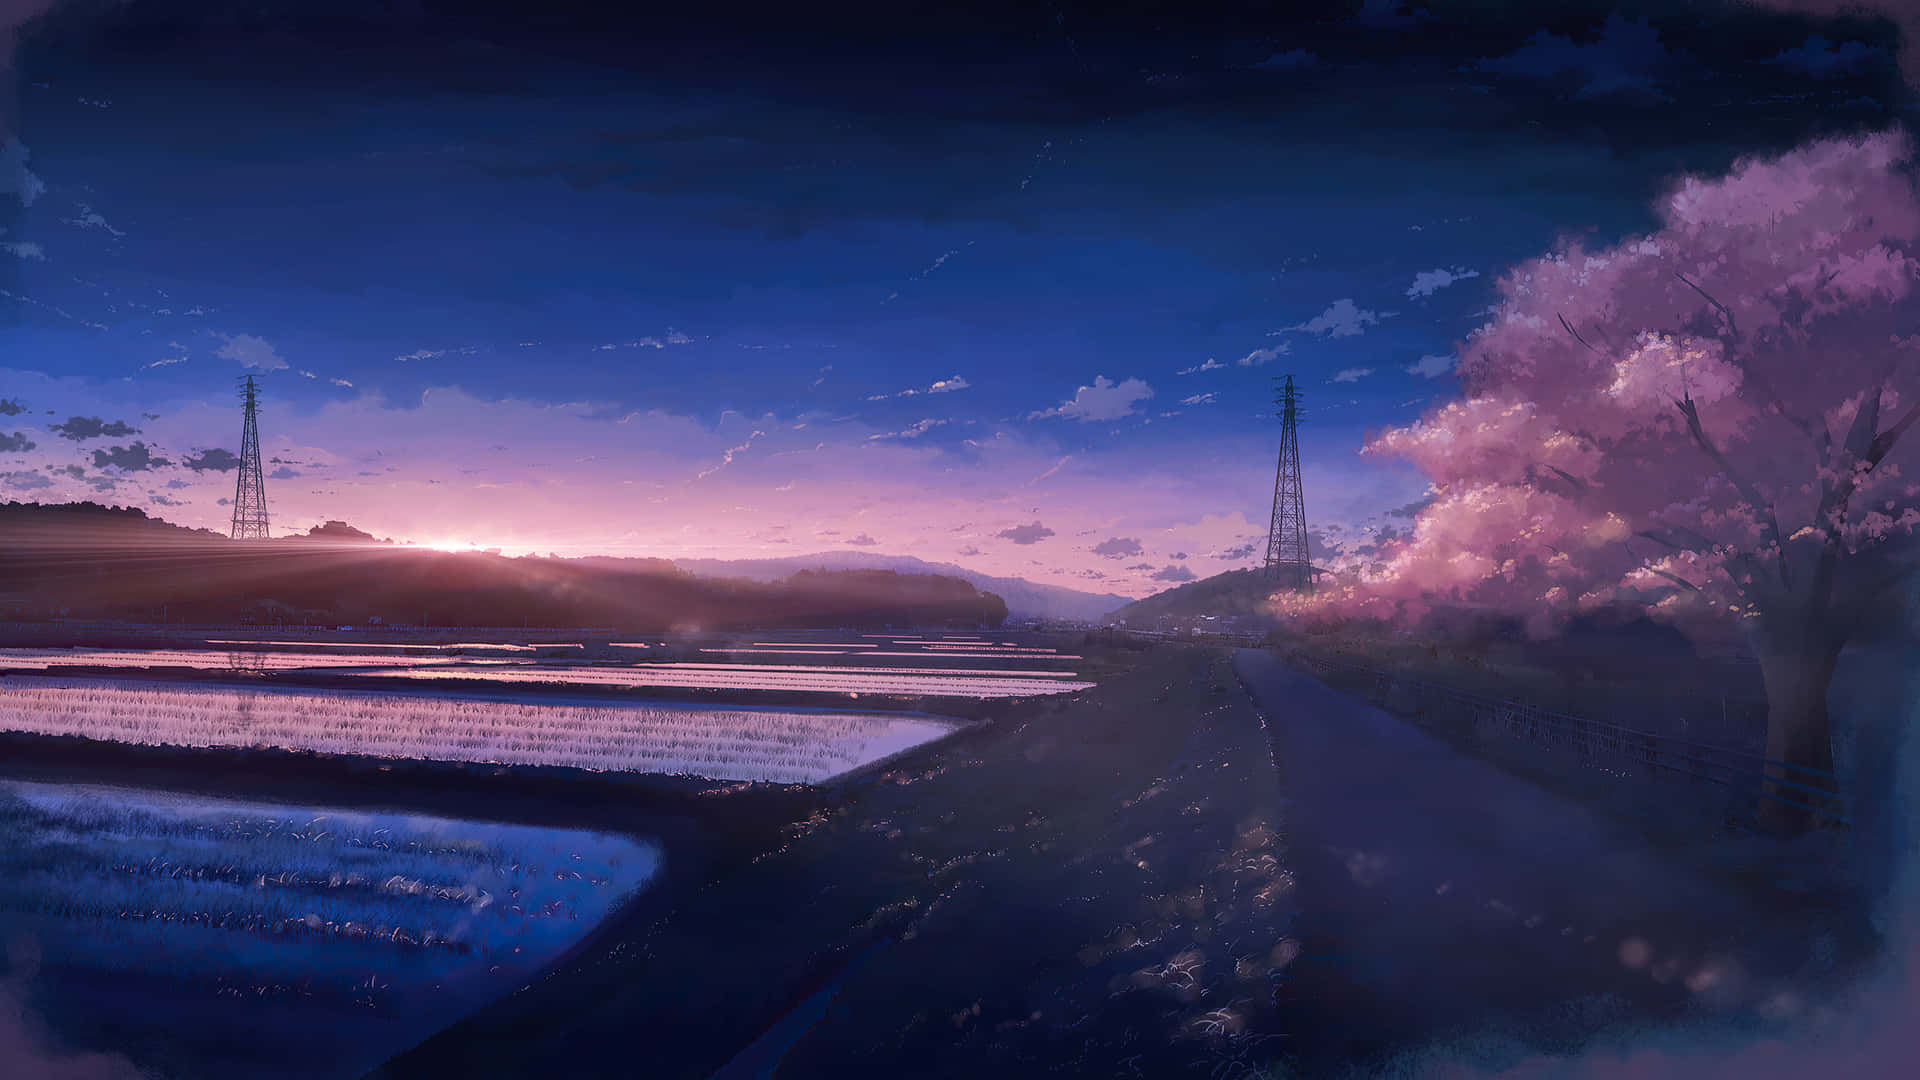 Explore the dream-like anime landscape